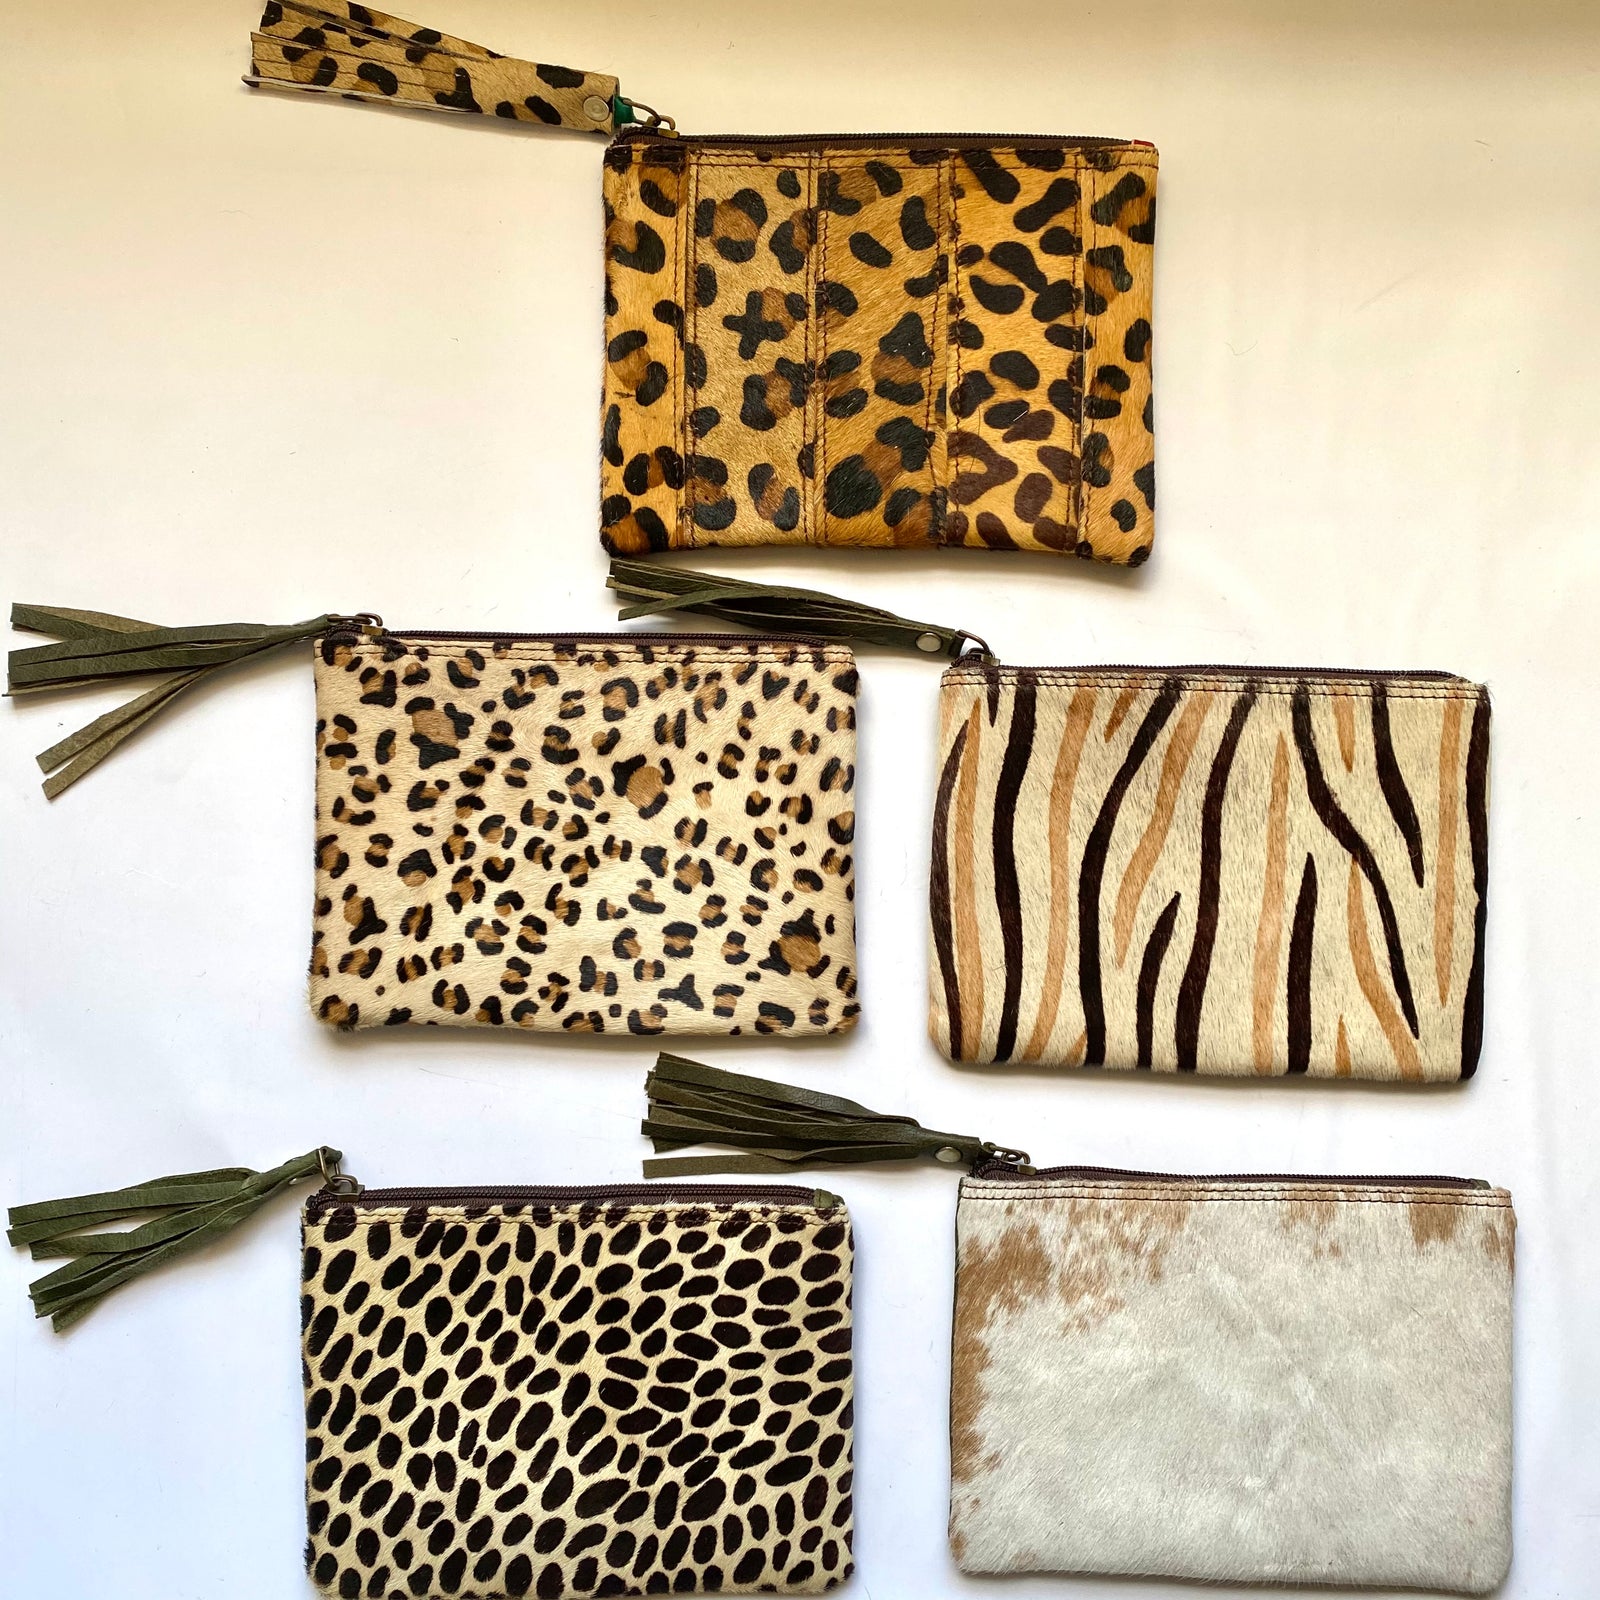 Leopard Clutch With Tassel, Foldover Clutch Leopard Print, Fold Over  Leather Clutch, Leopard Calf Hair Fold Over Clutch, Leopard Clutch - Etsy |  Printed leather clutch, Leopard clutch, Clutch